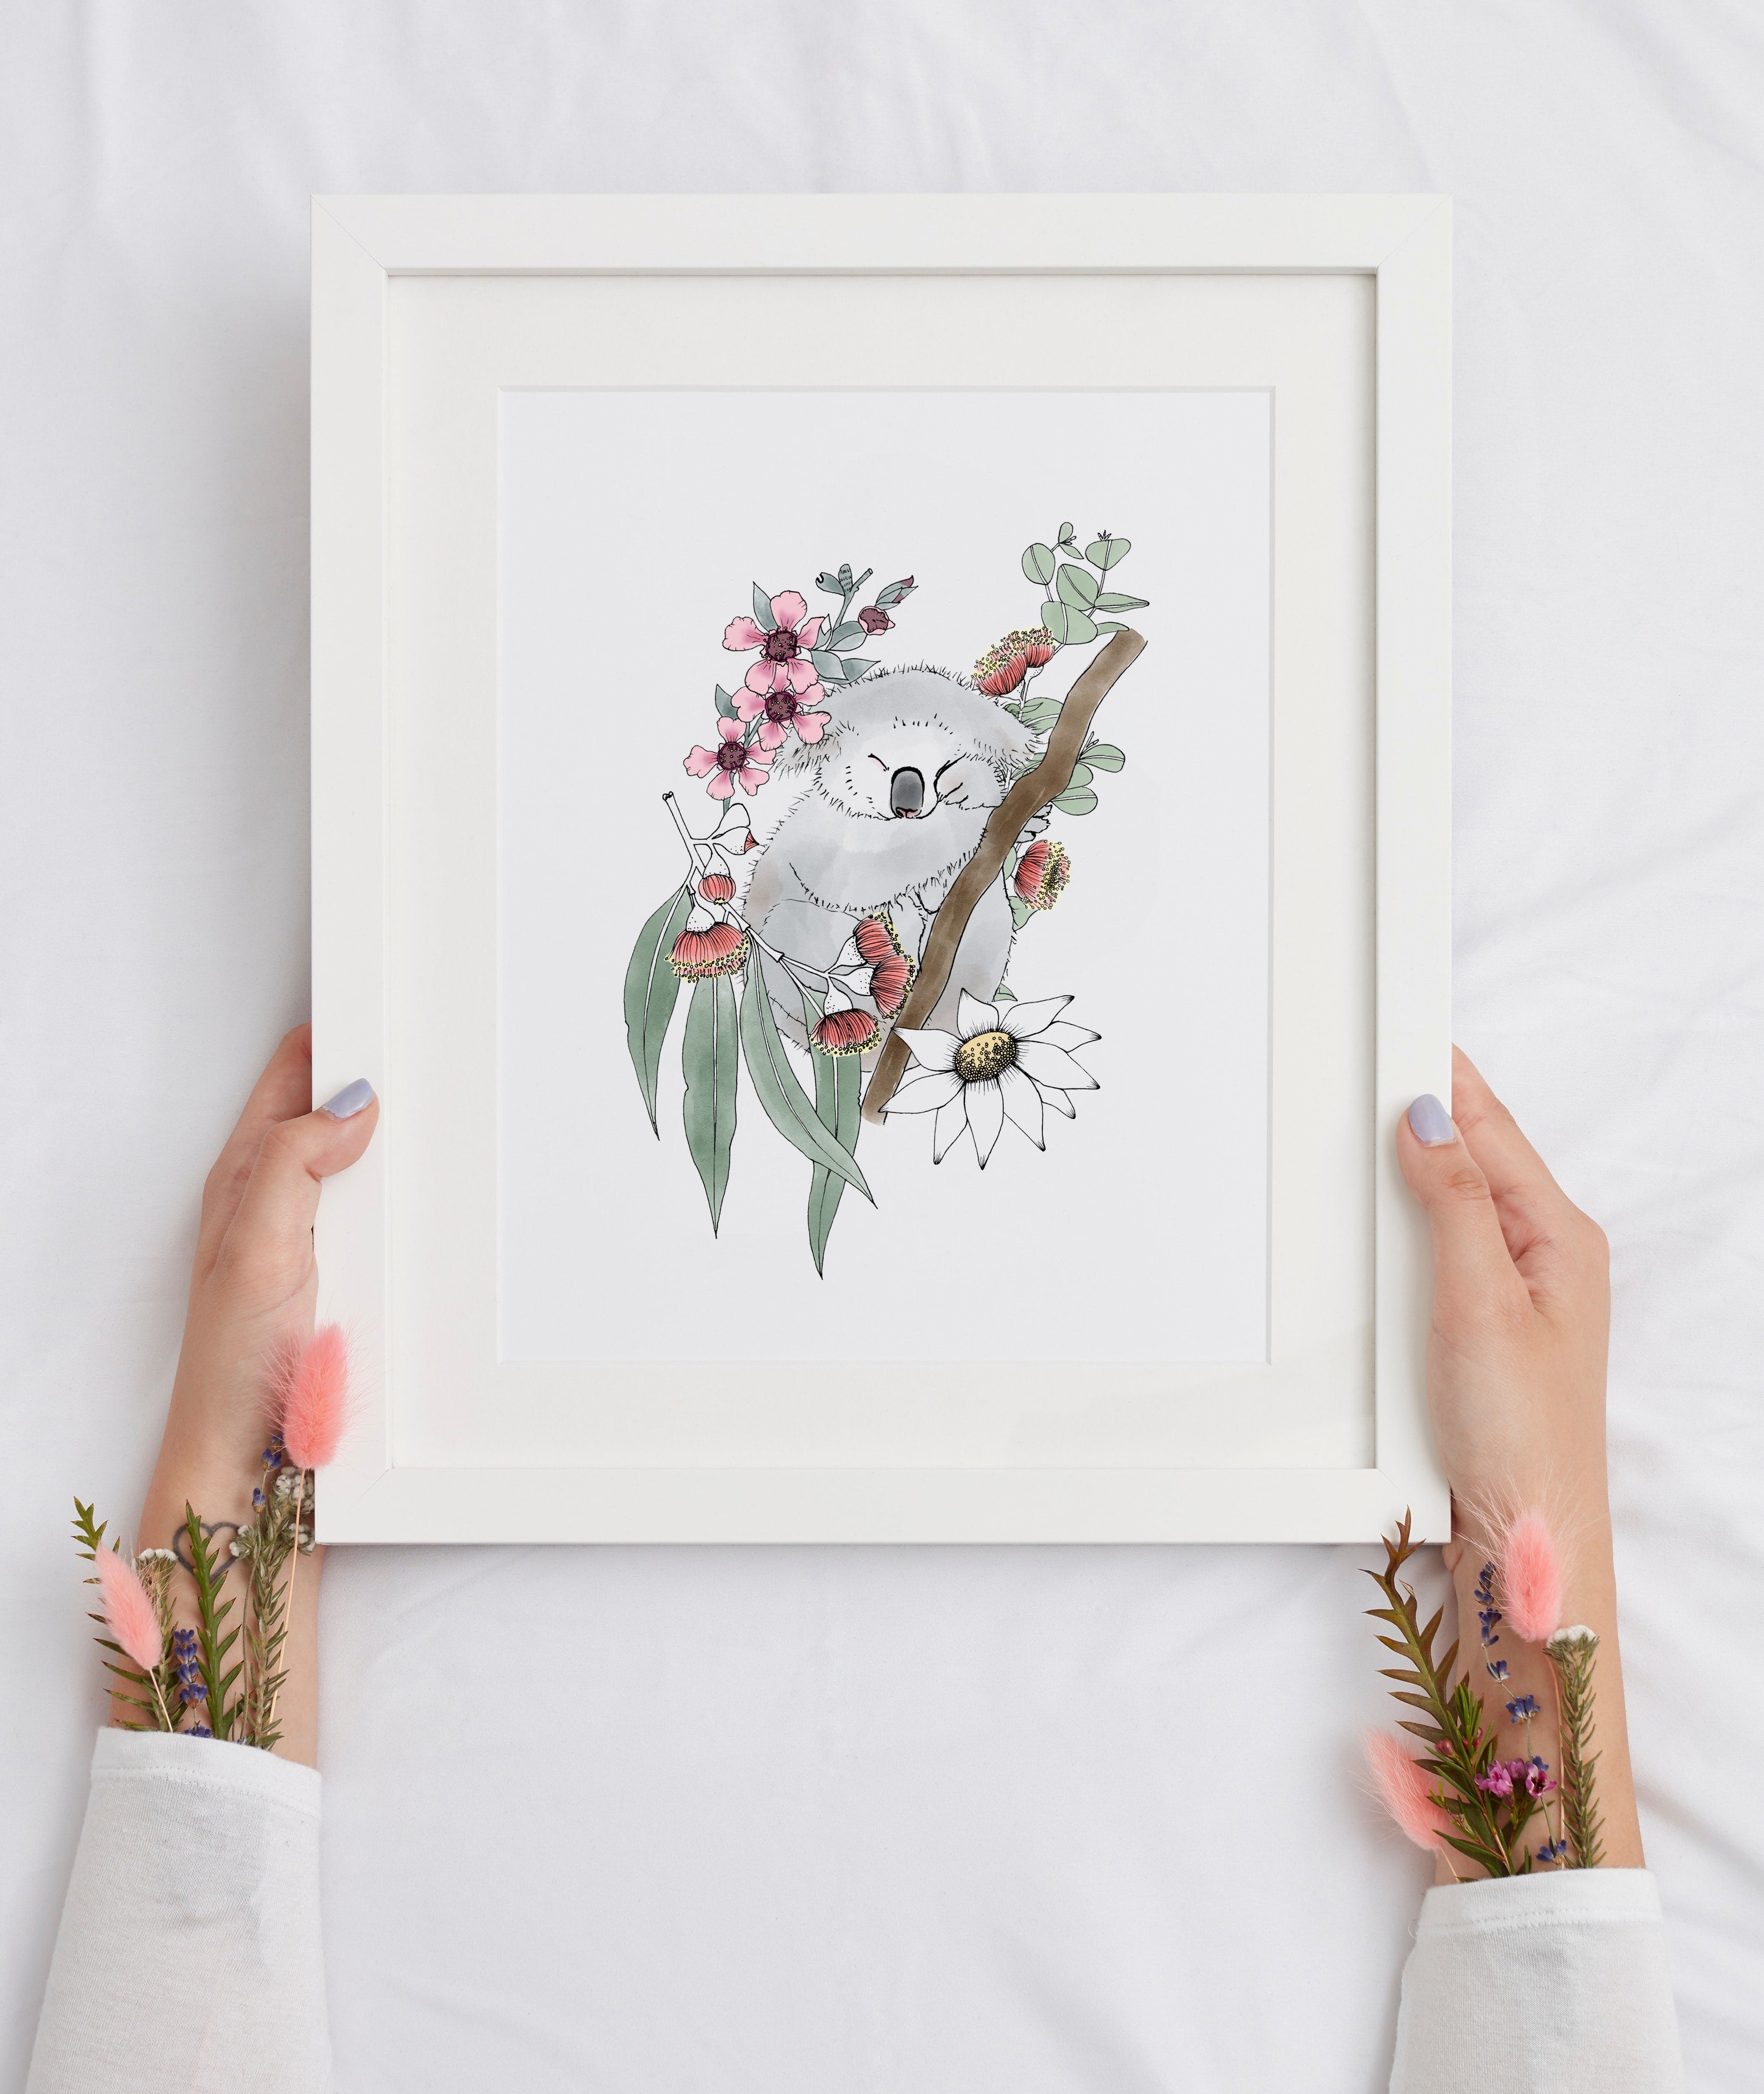 Sleepy Koala Art Print - art print - Dancing with juniper